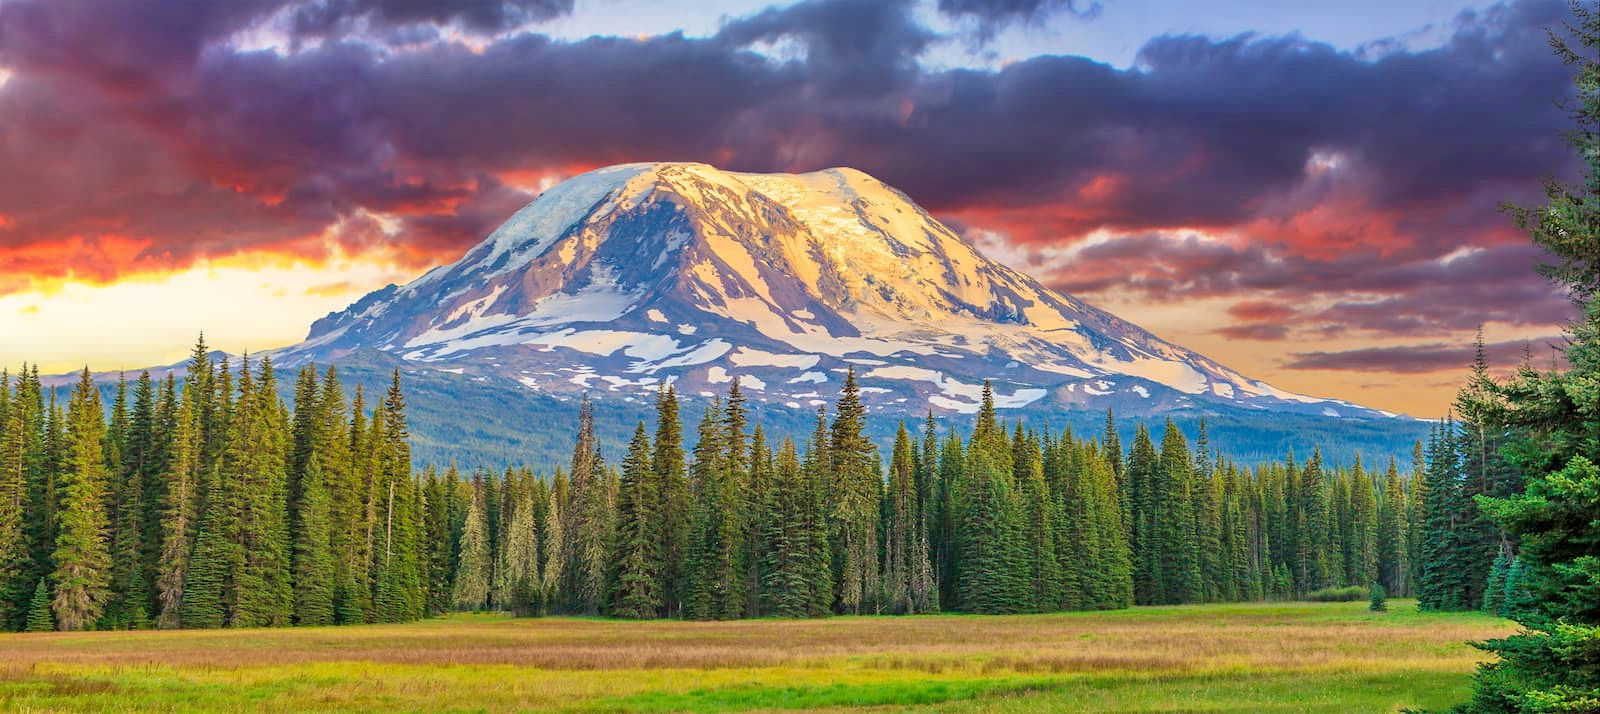 Mount Adams (Washington) - Wikipedia